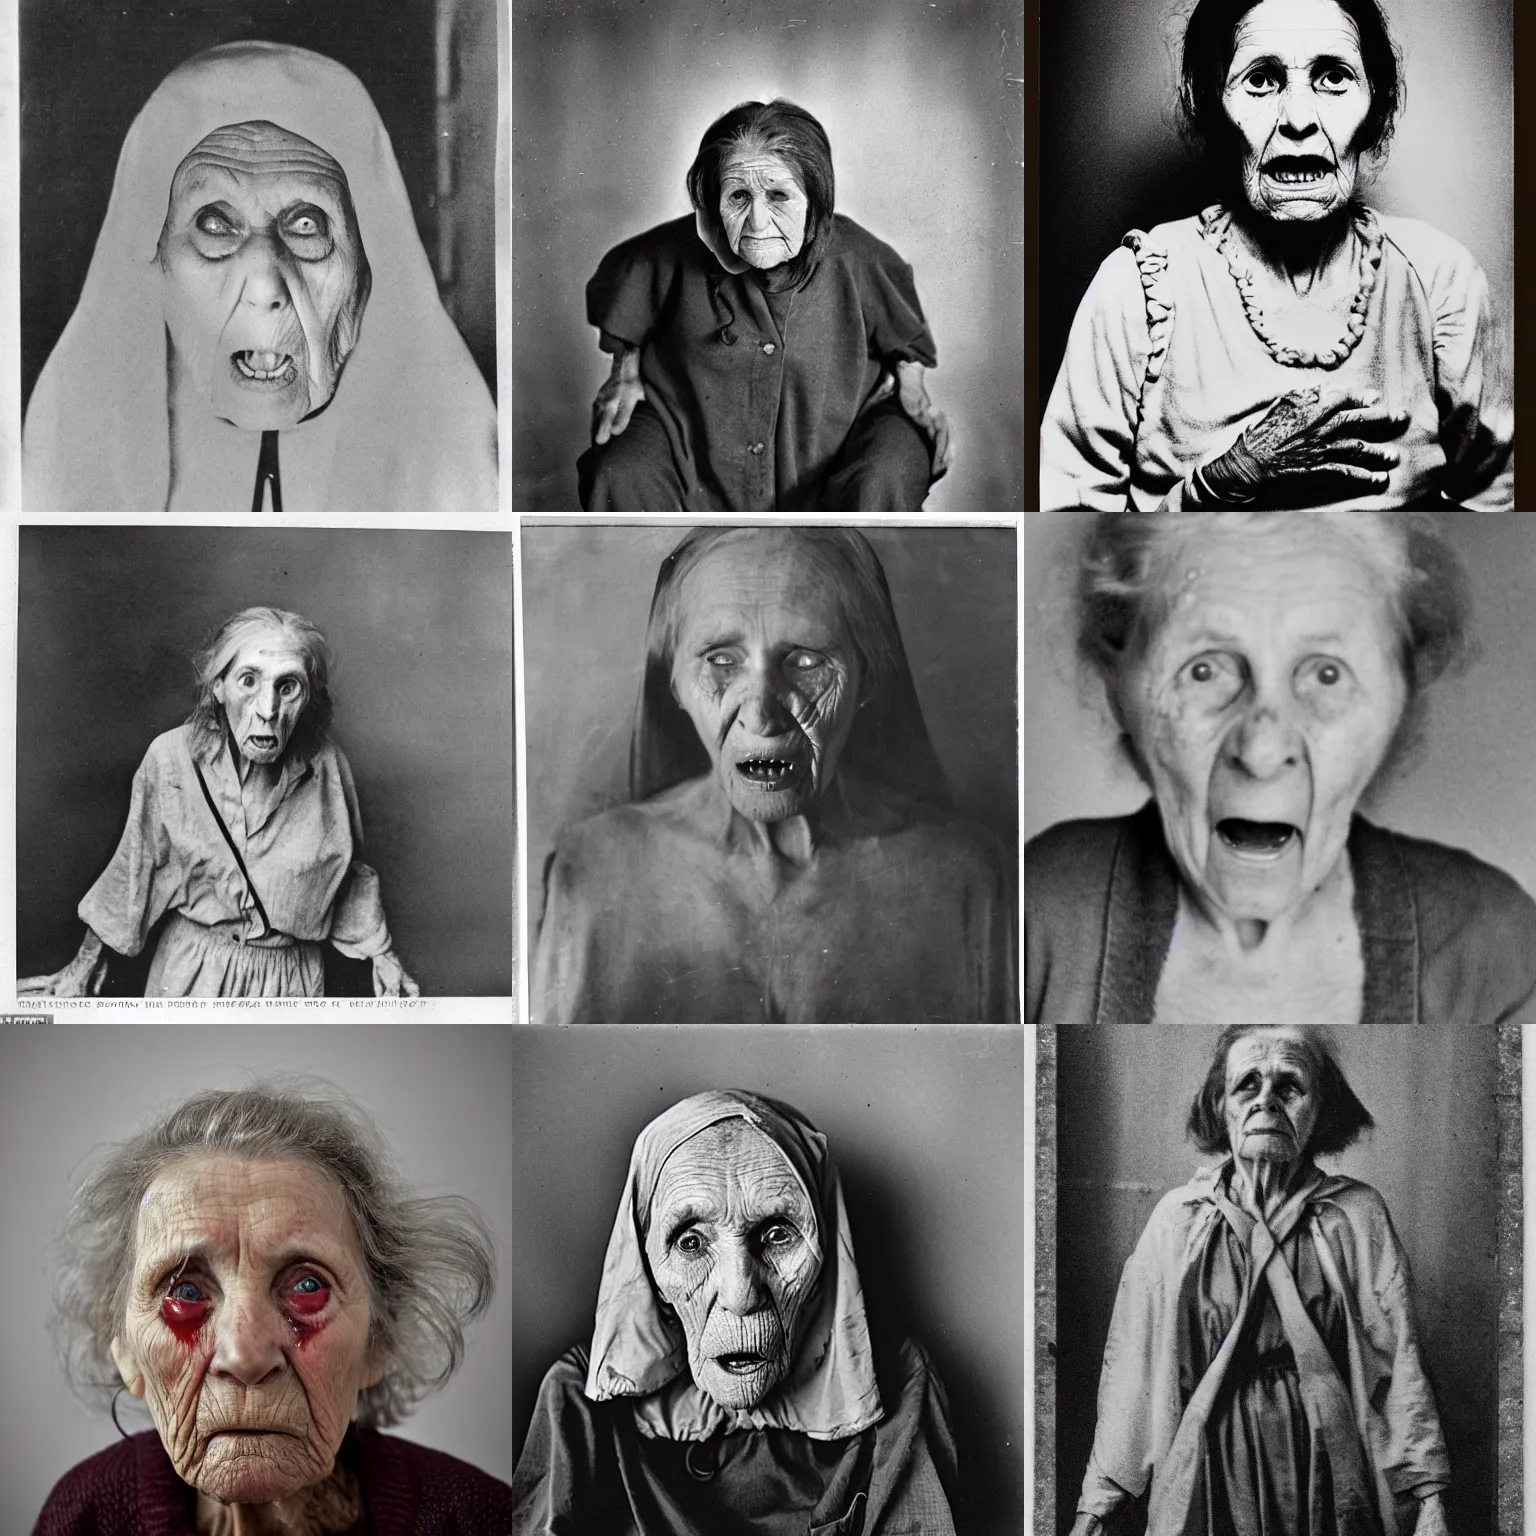 Prompt: portrait of a criminally insane elderly woman possessed by demons, disturbing psychology journal photograph